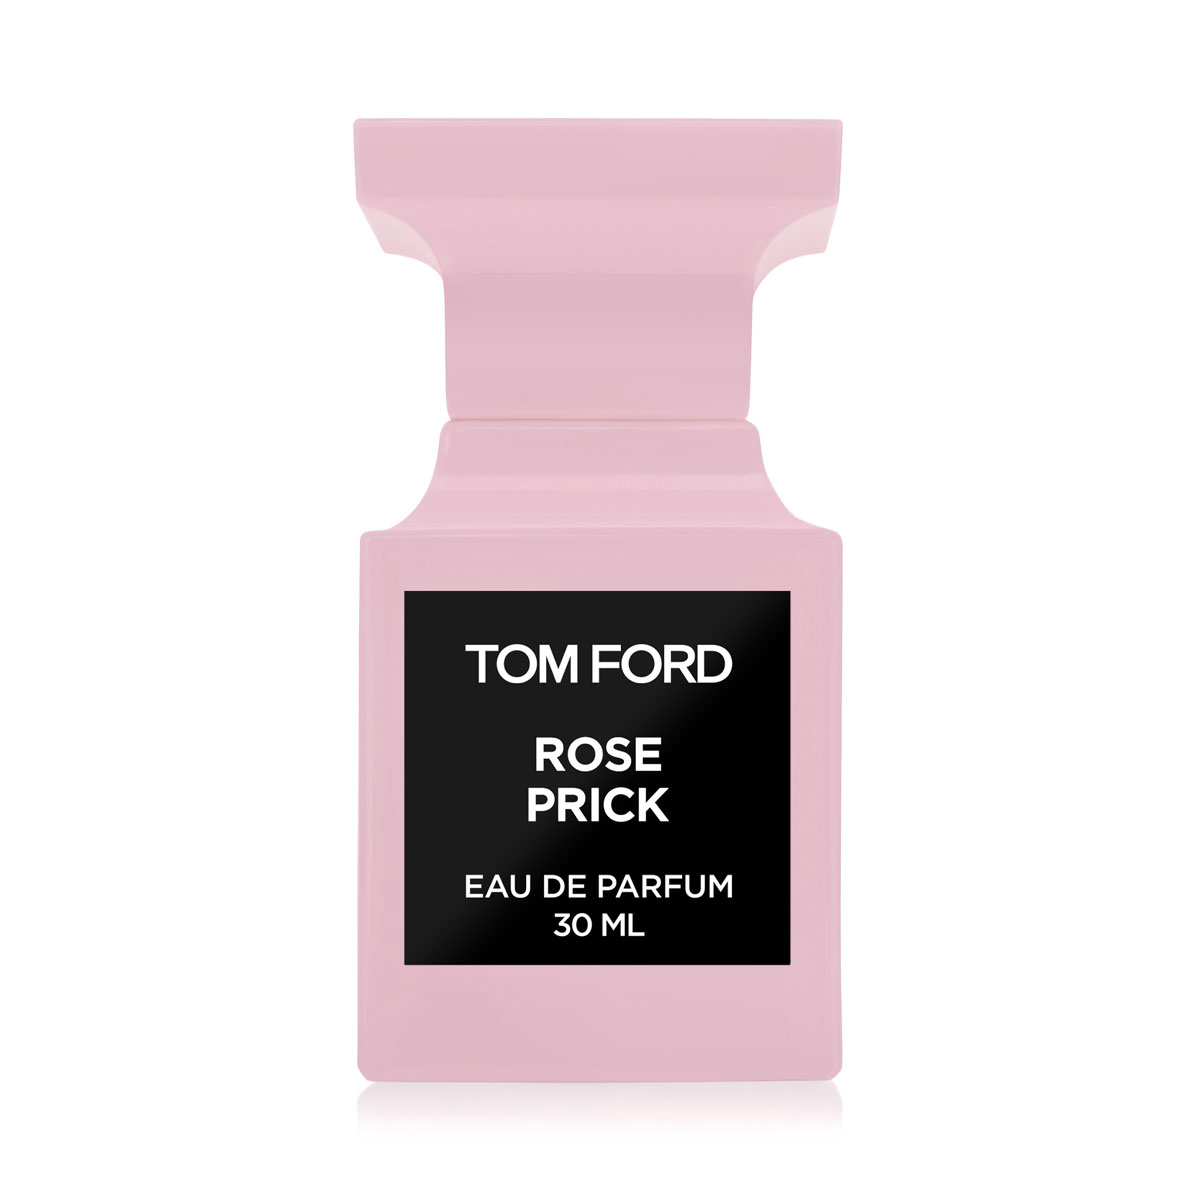 Tom Ford Rose Prick Eau de Parfum 30ml - Feelunique Exclusive